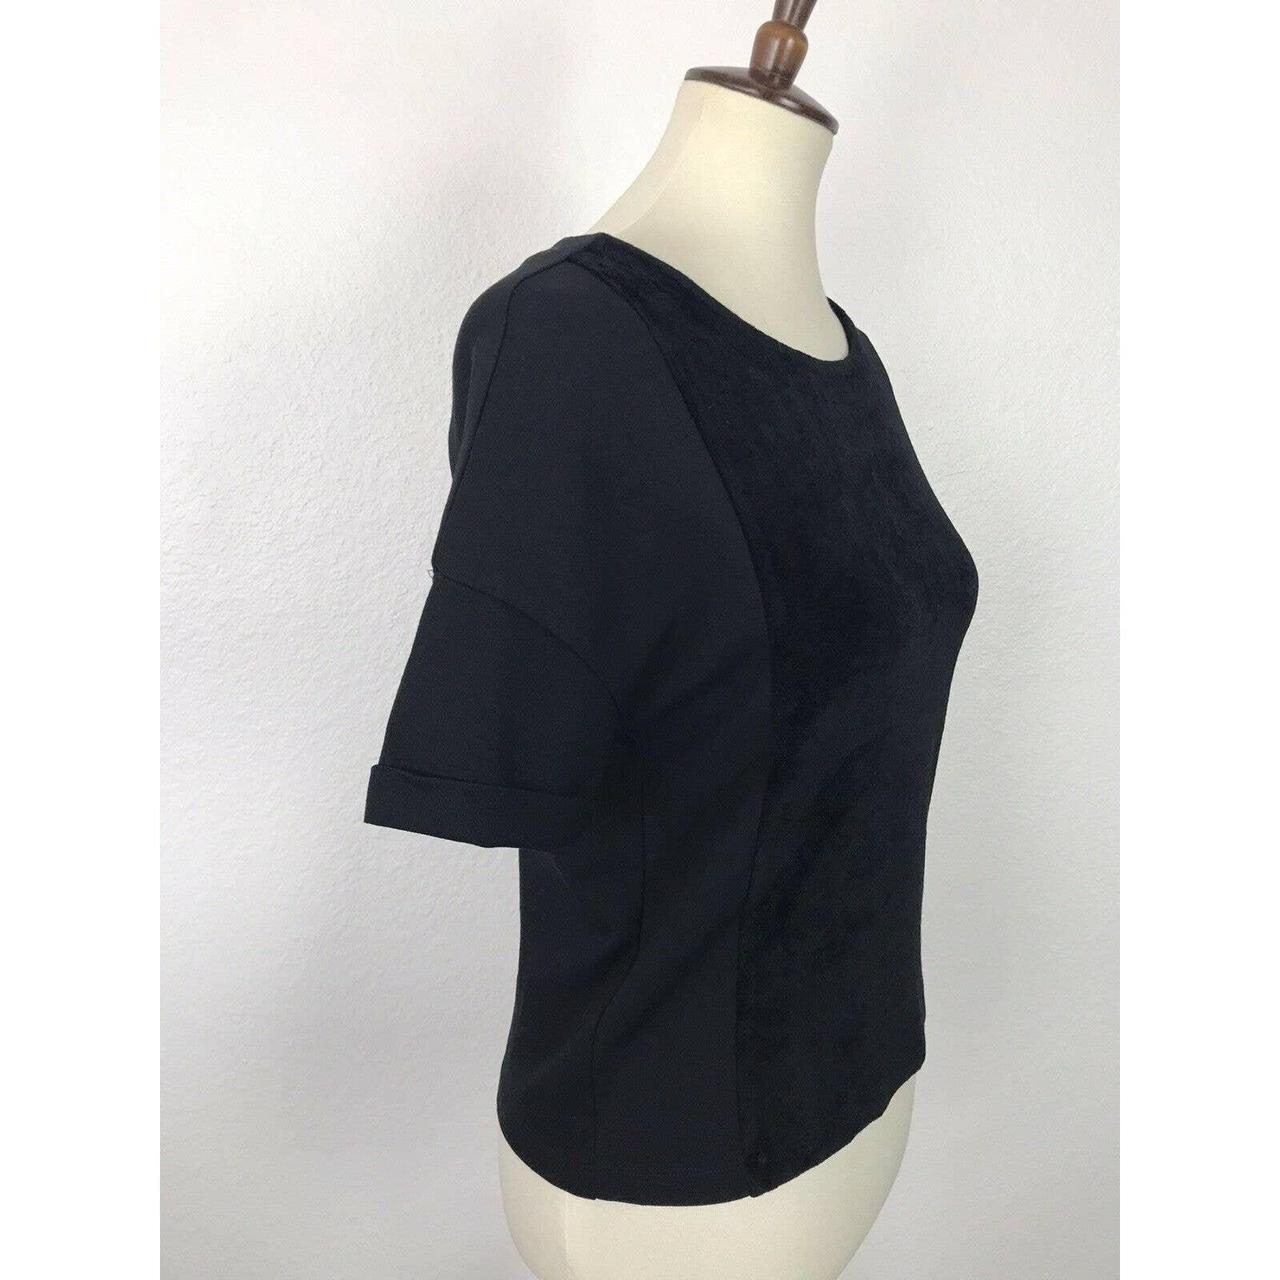 Product Image 4 - Karen Millen Pullover Knit Top

Black

Back Zip

Size